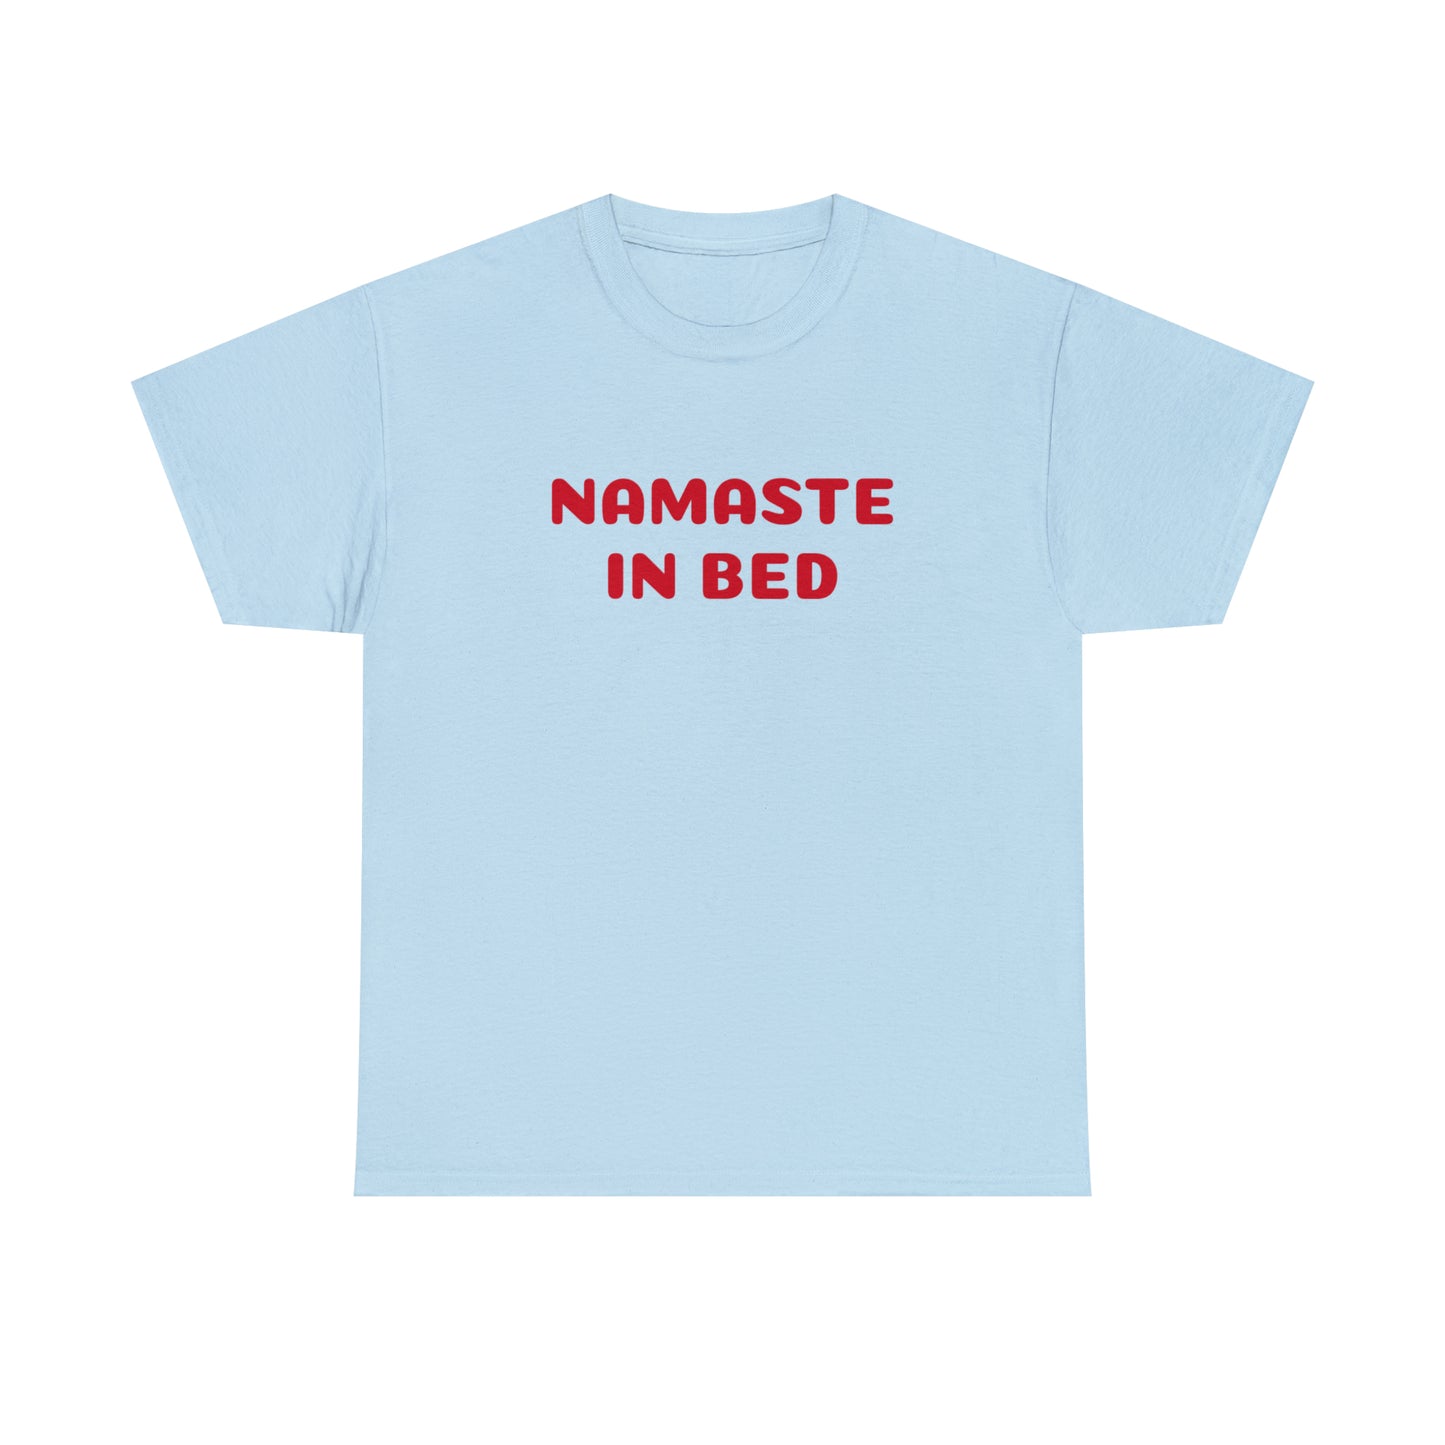 Custom Parody T-shirt, Namaste in bed shirt design